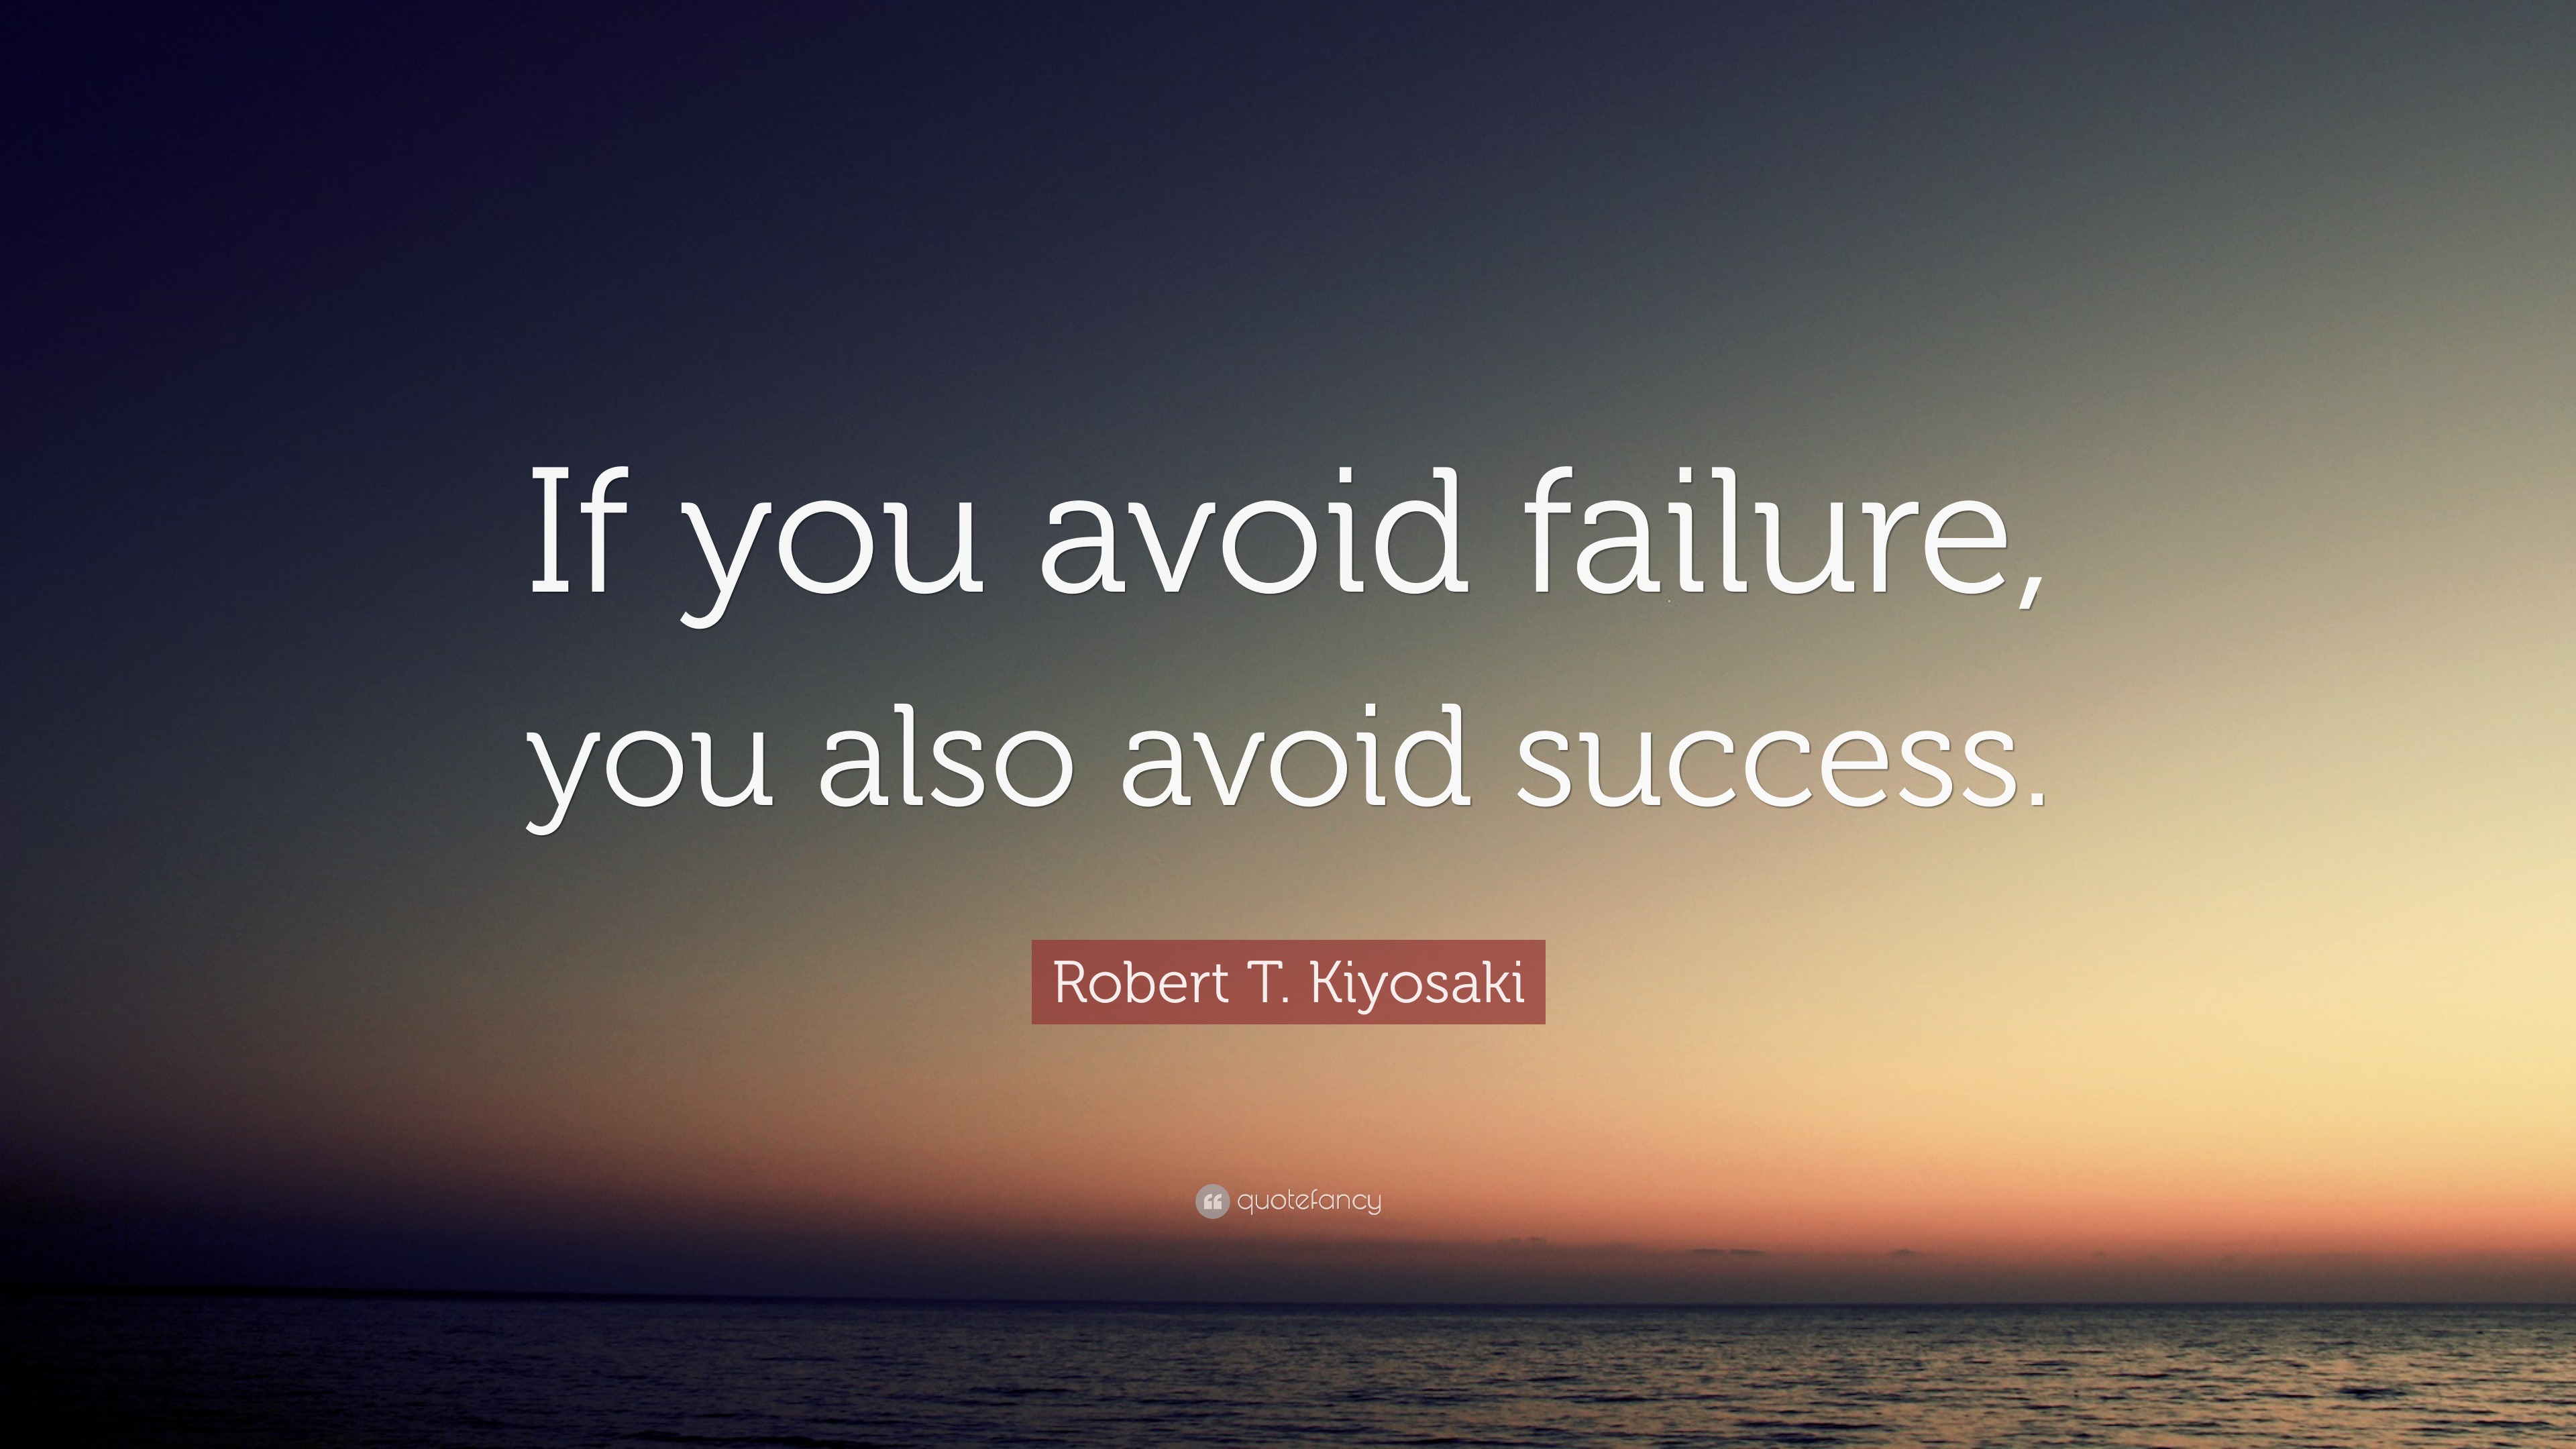 Robert T. Kiyosaki Quote: “If you avoid failure, you also avoid success.”